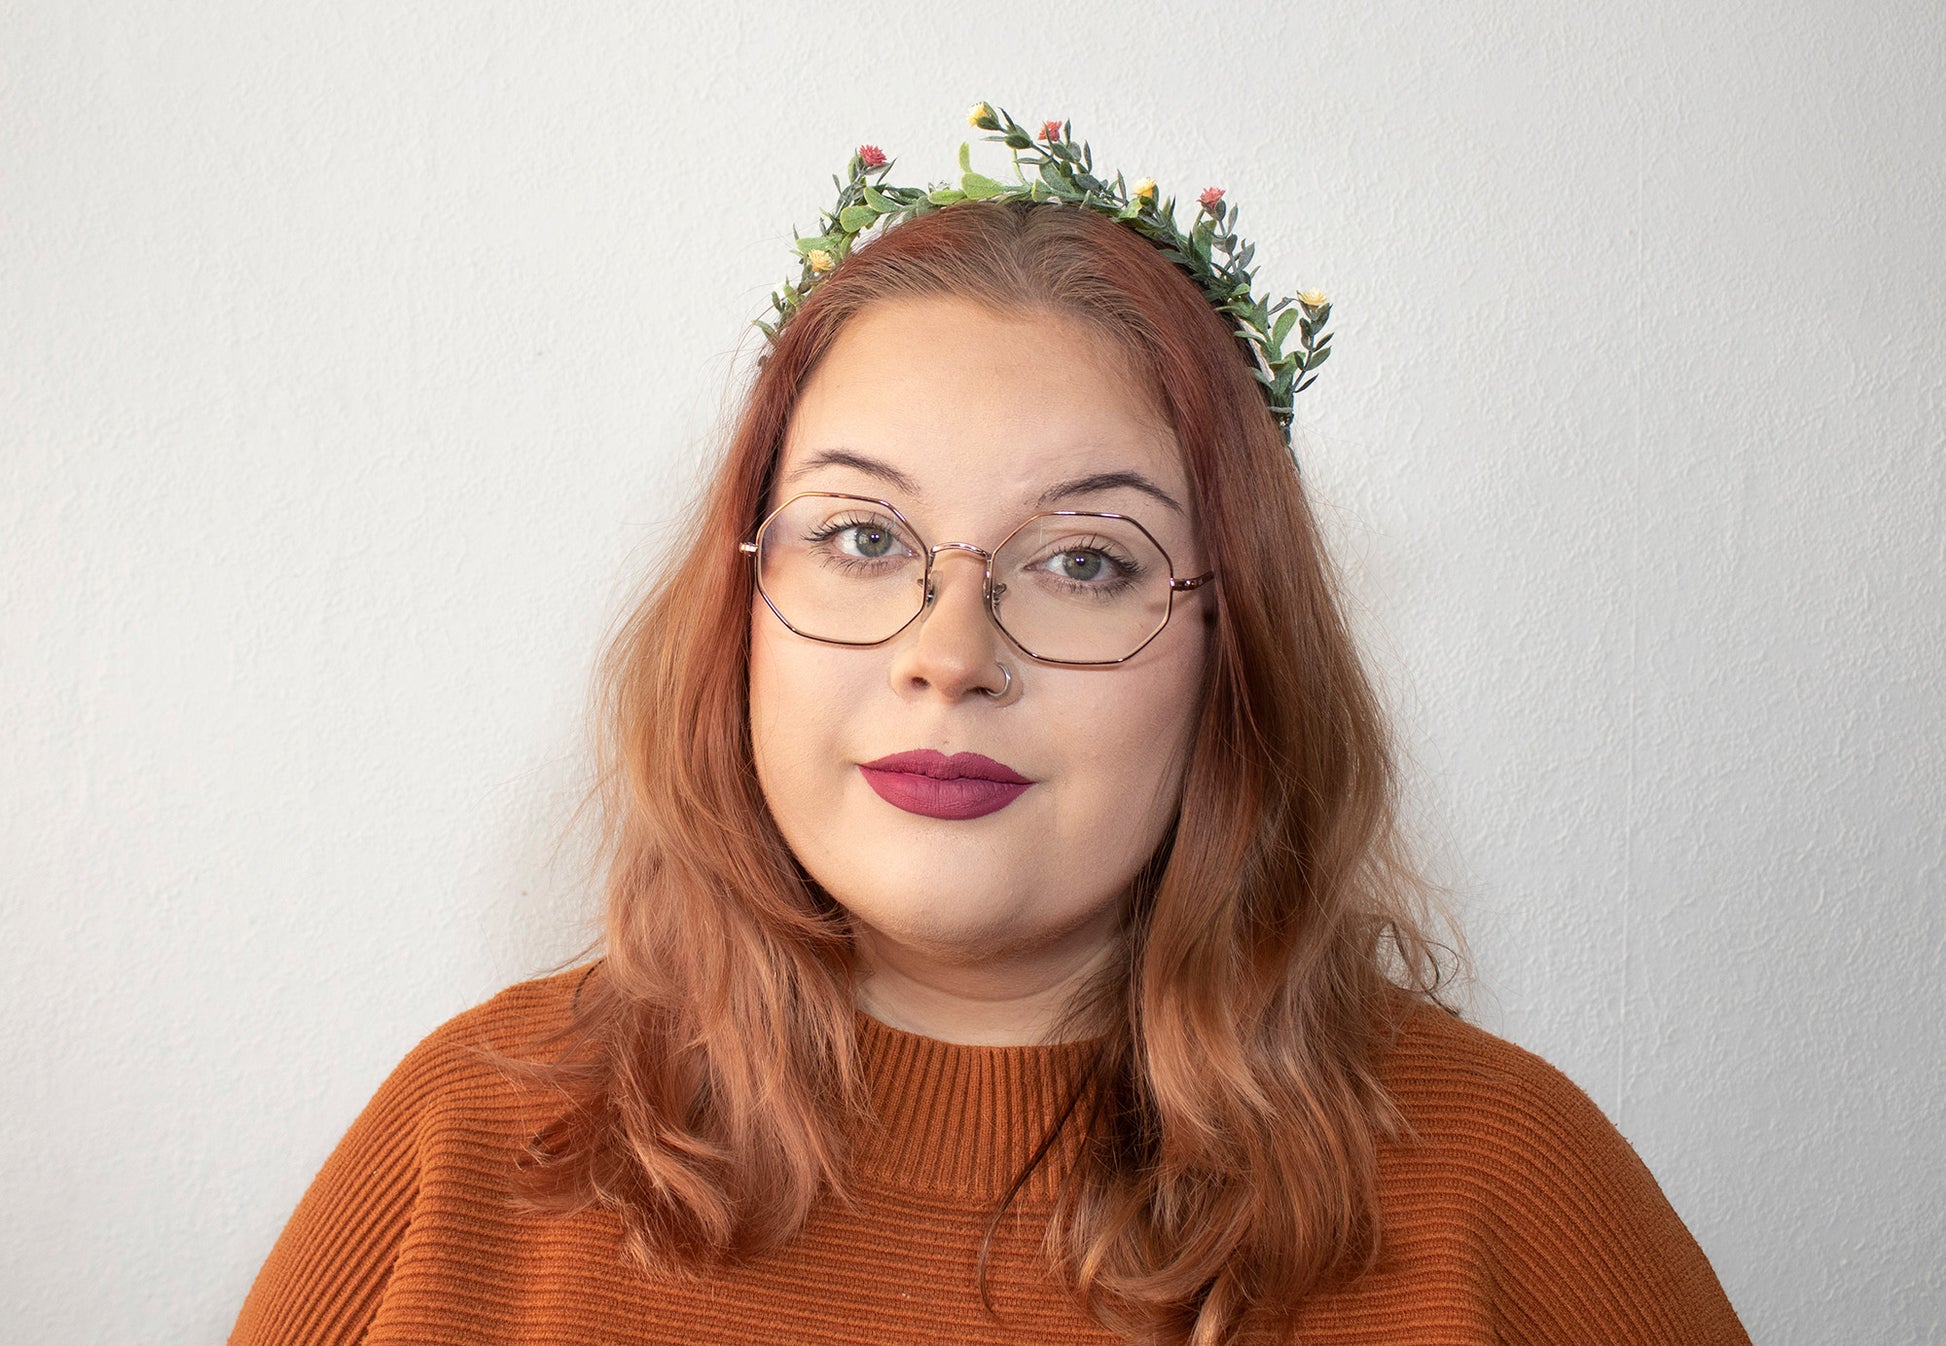 Belofte Vrijgevig Scorch Haarband met gekleurd gipskruid – by Odette Design